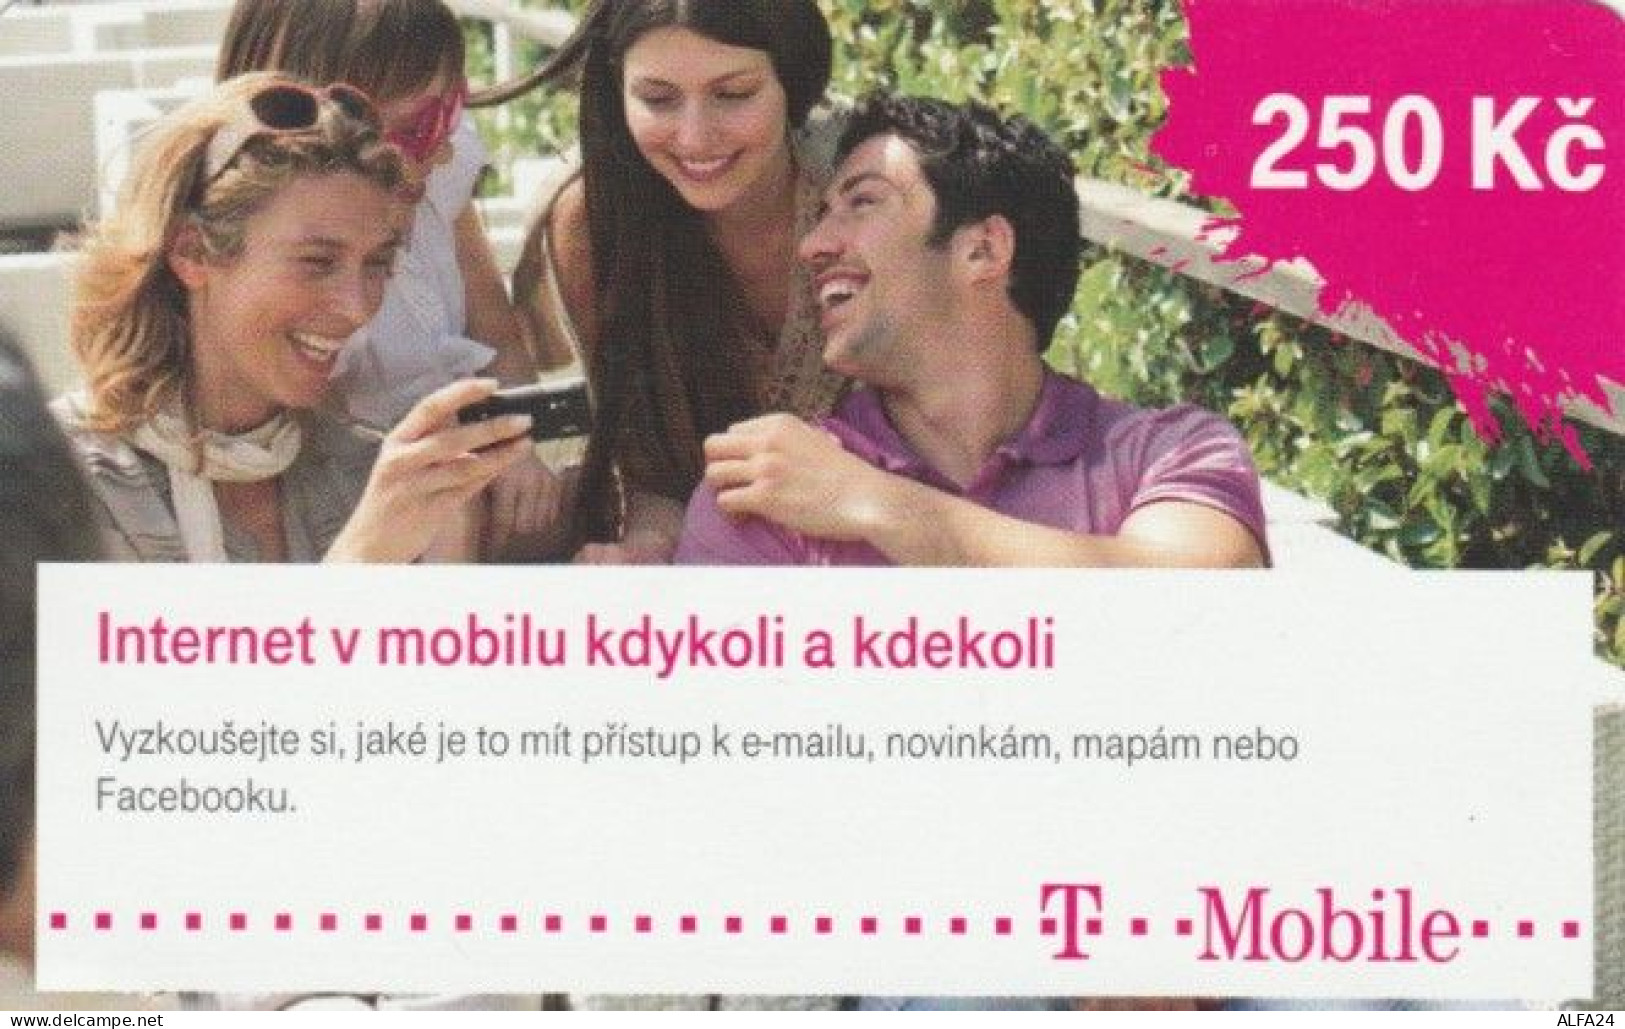 PREPAID PHONE CARD REPUBBLICA CECA - T MOBILE (PK2206 - Tschechische Rep.